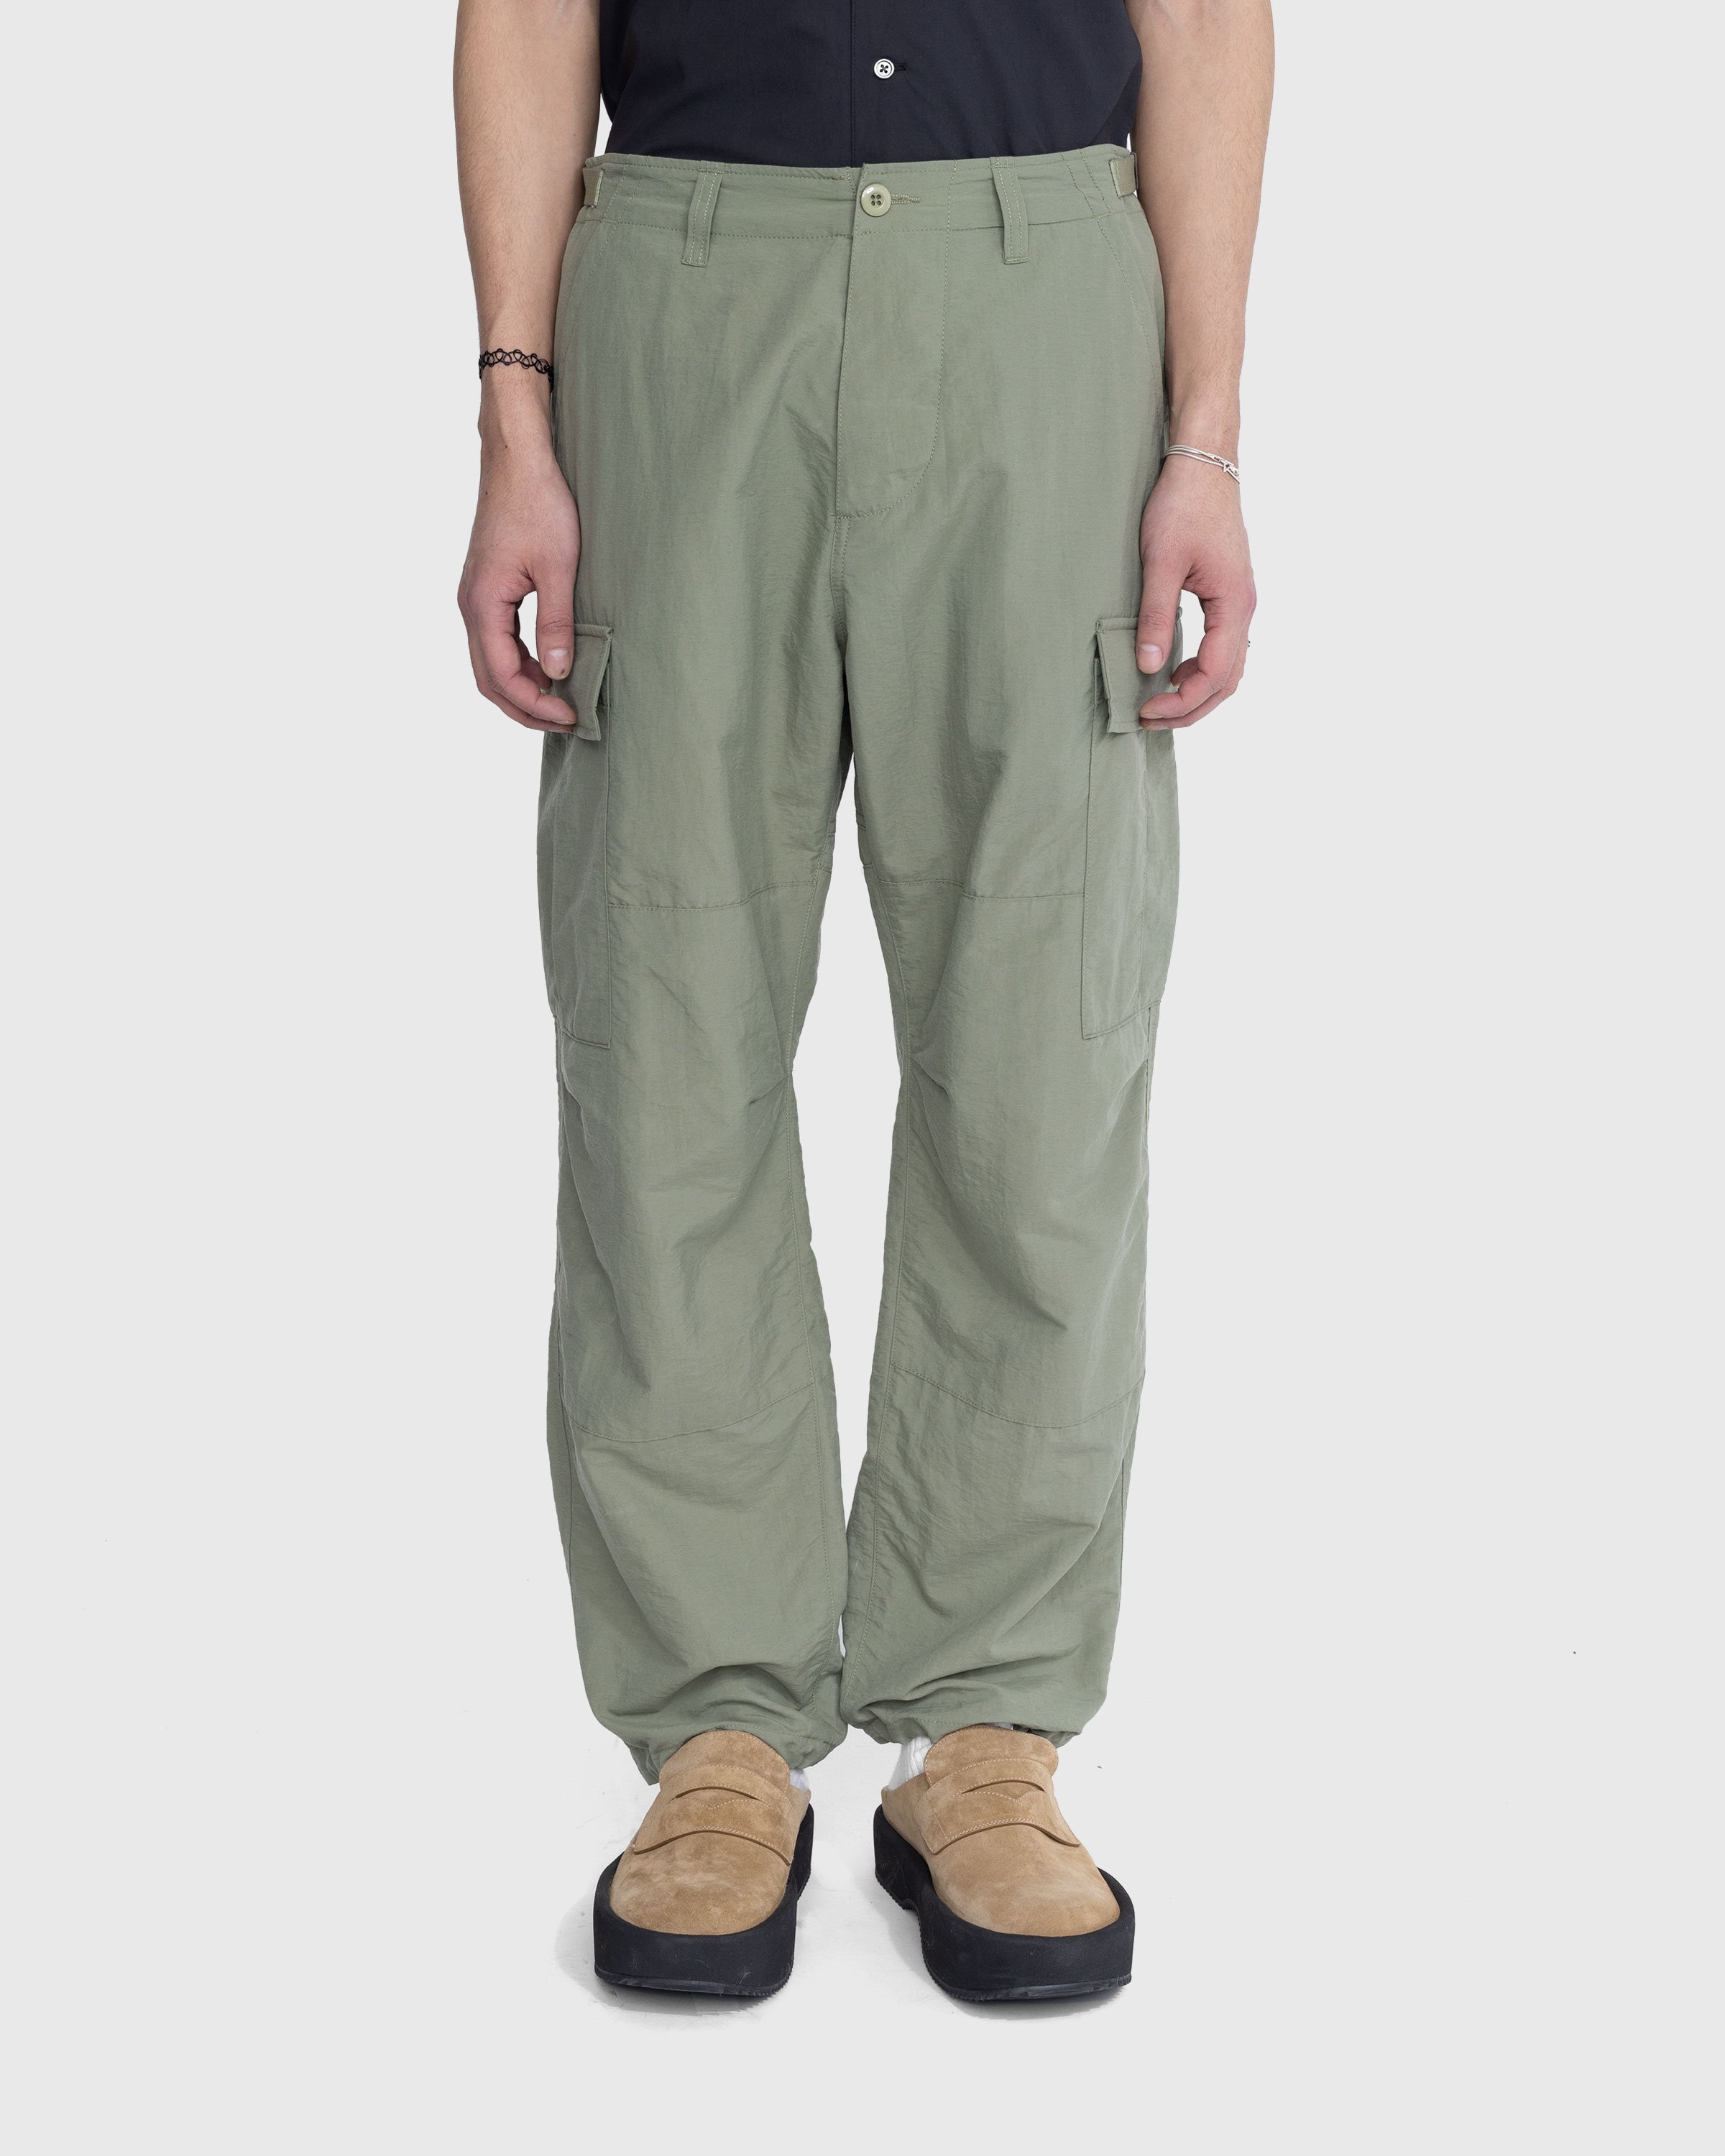 Highsnobiety - Nylon Cargo Pants Khaki - Clothing - Green - Image 2